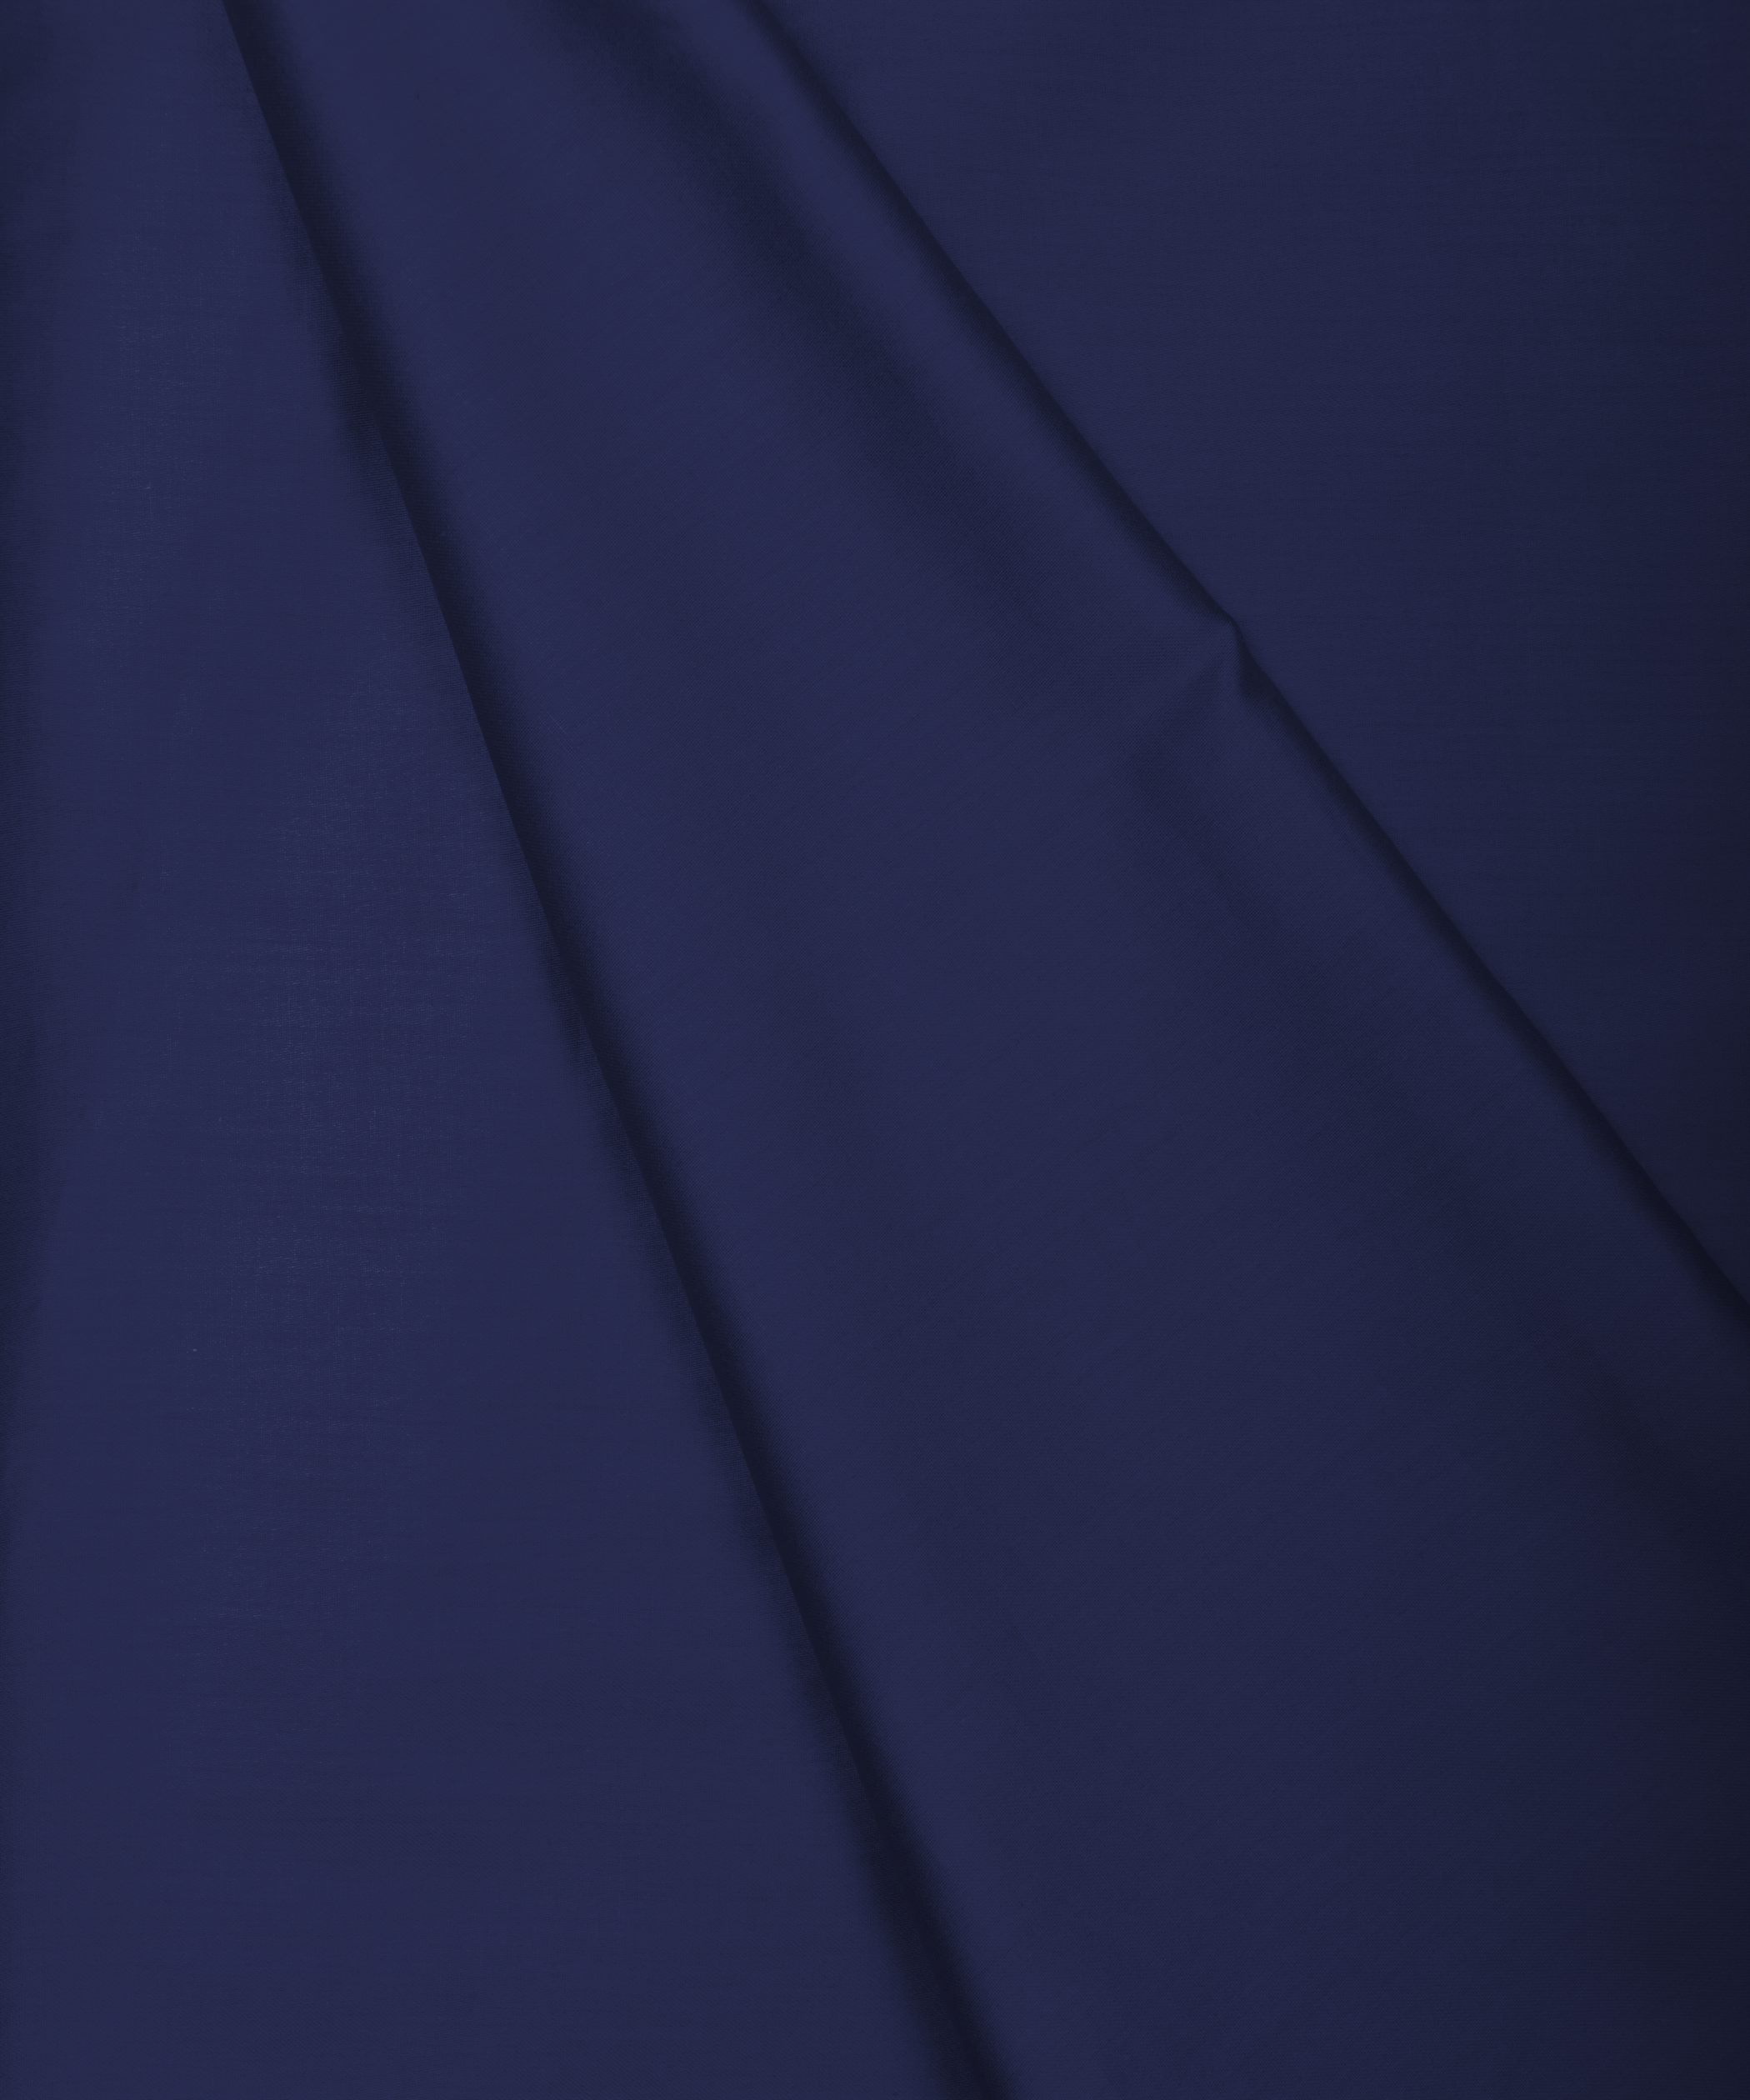 Navy Blue Plain Dyed Cotton Satin Fabric